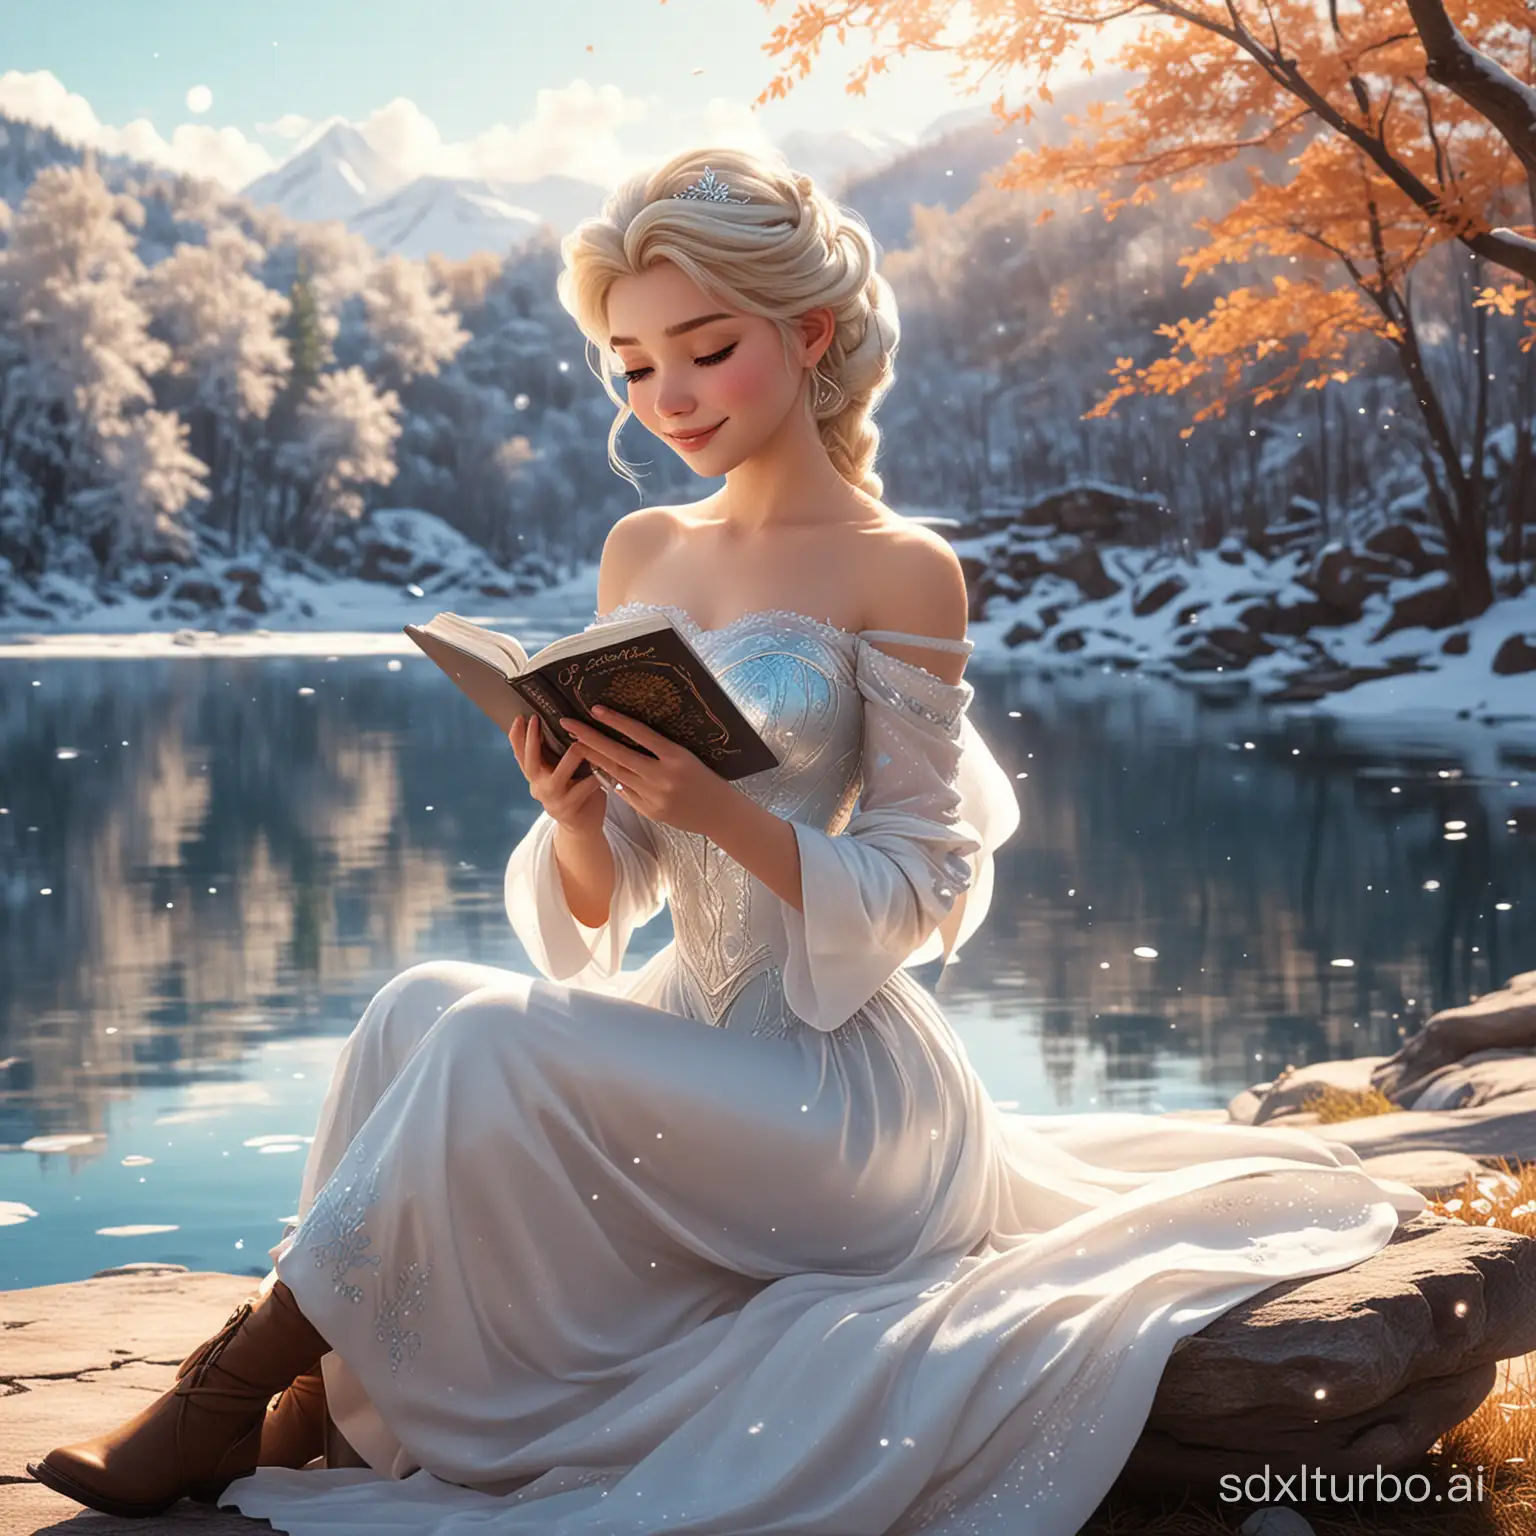 Princess-Elsa-Enjoying-Sunshine-by-the-Lake-Relaxing-Readings-and-Sweet-Smiles